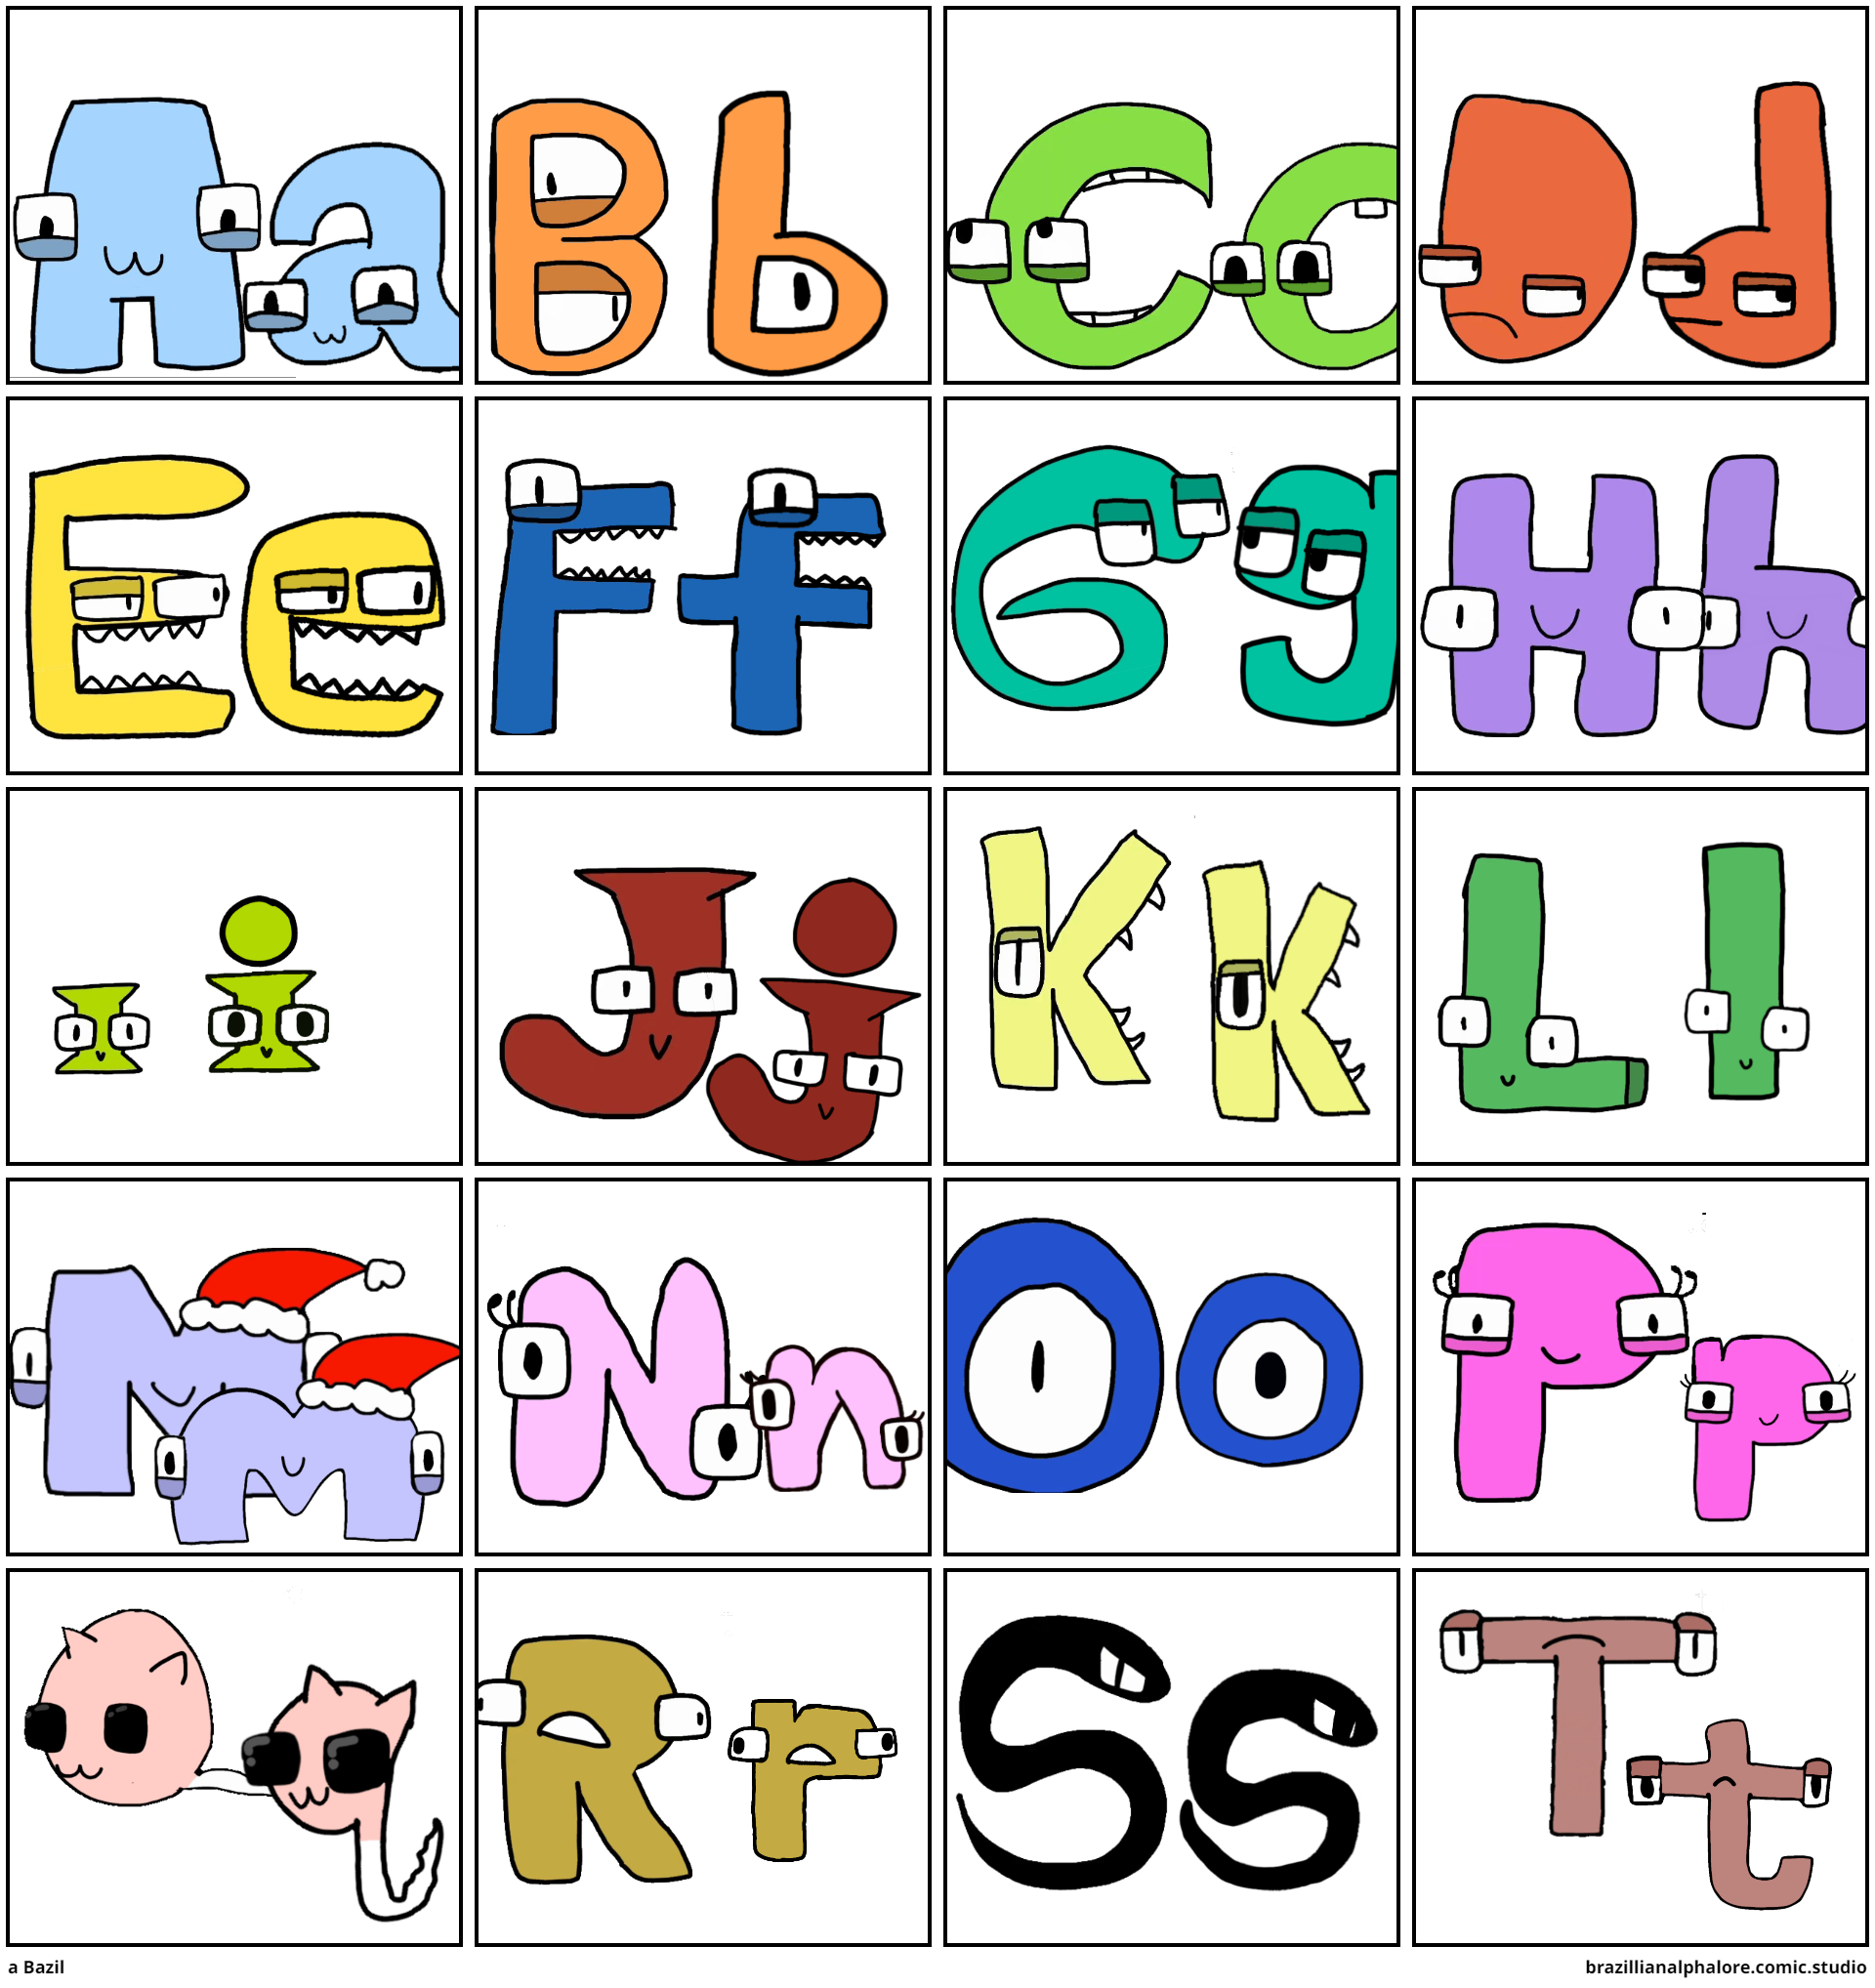 L  Brazilian alphabet lore 